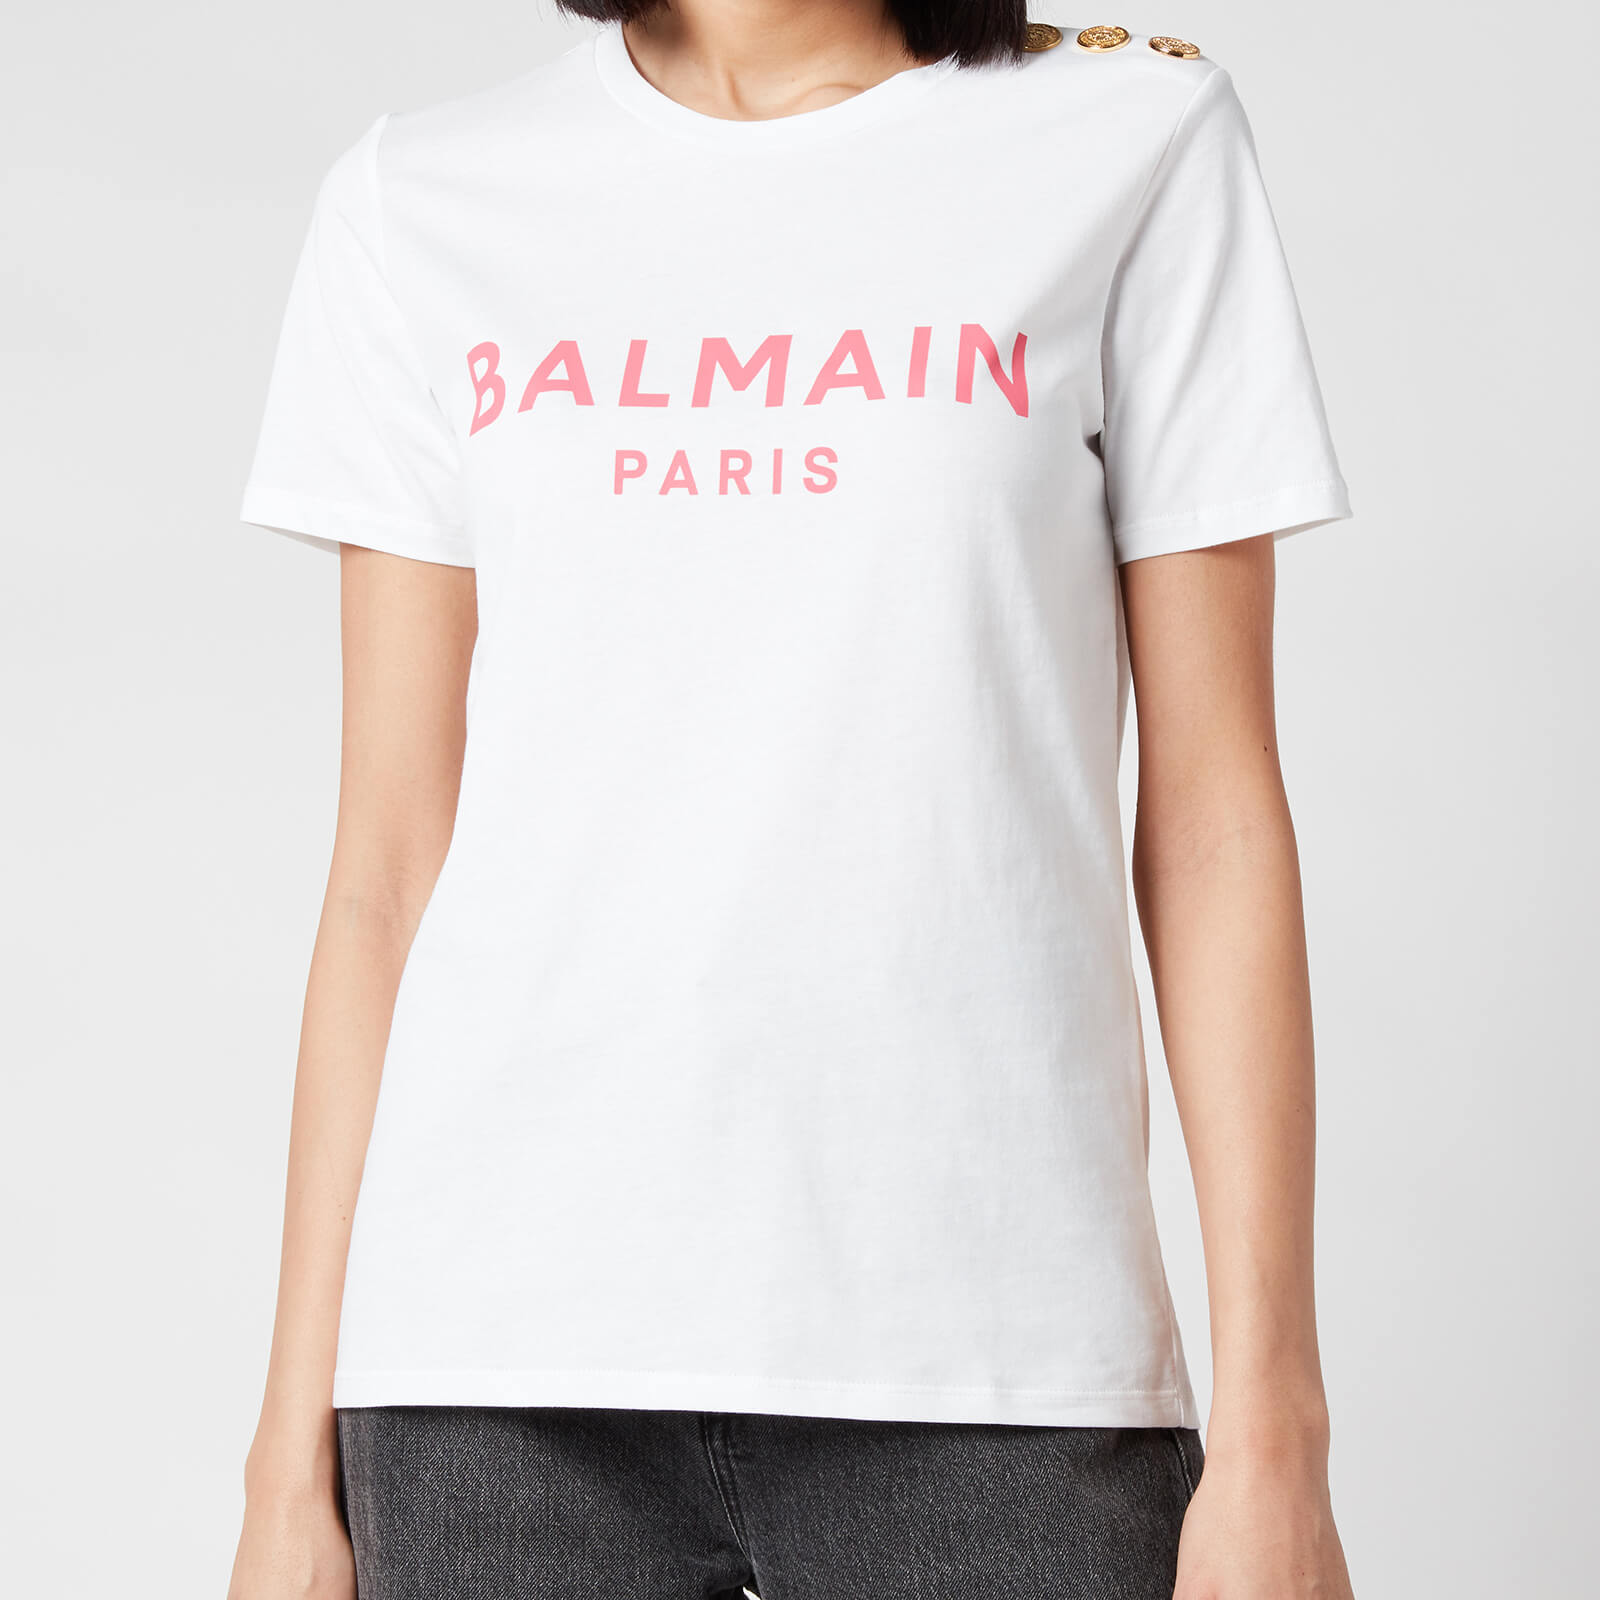 Balmain Women's 3 Button Printed Logo T-Shirt - Blanc/Rose - L